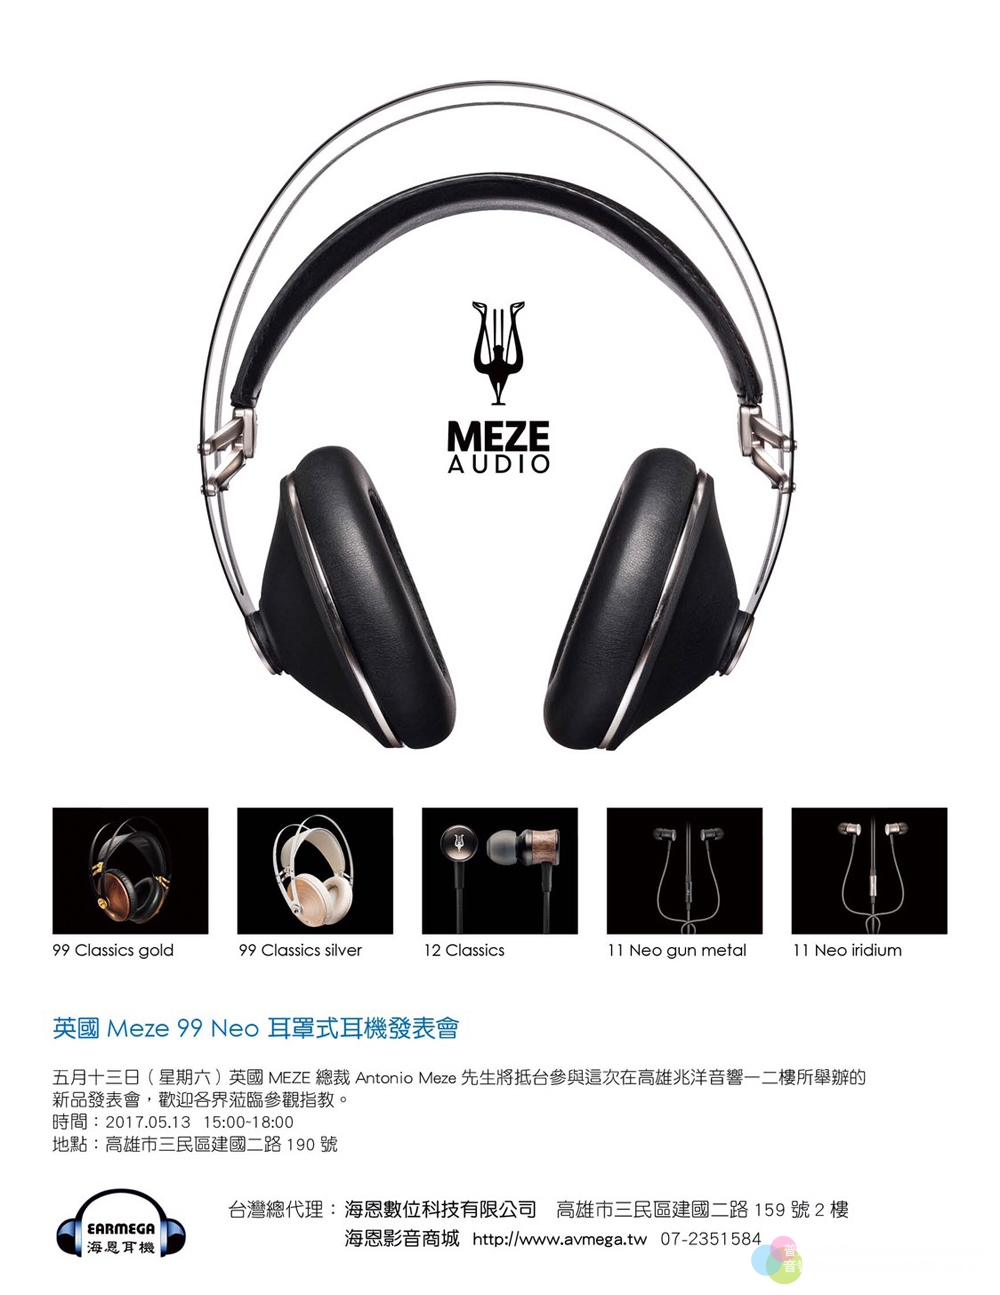 Meze 99 Neo耳罩式耳機新品發表會